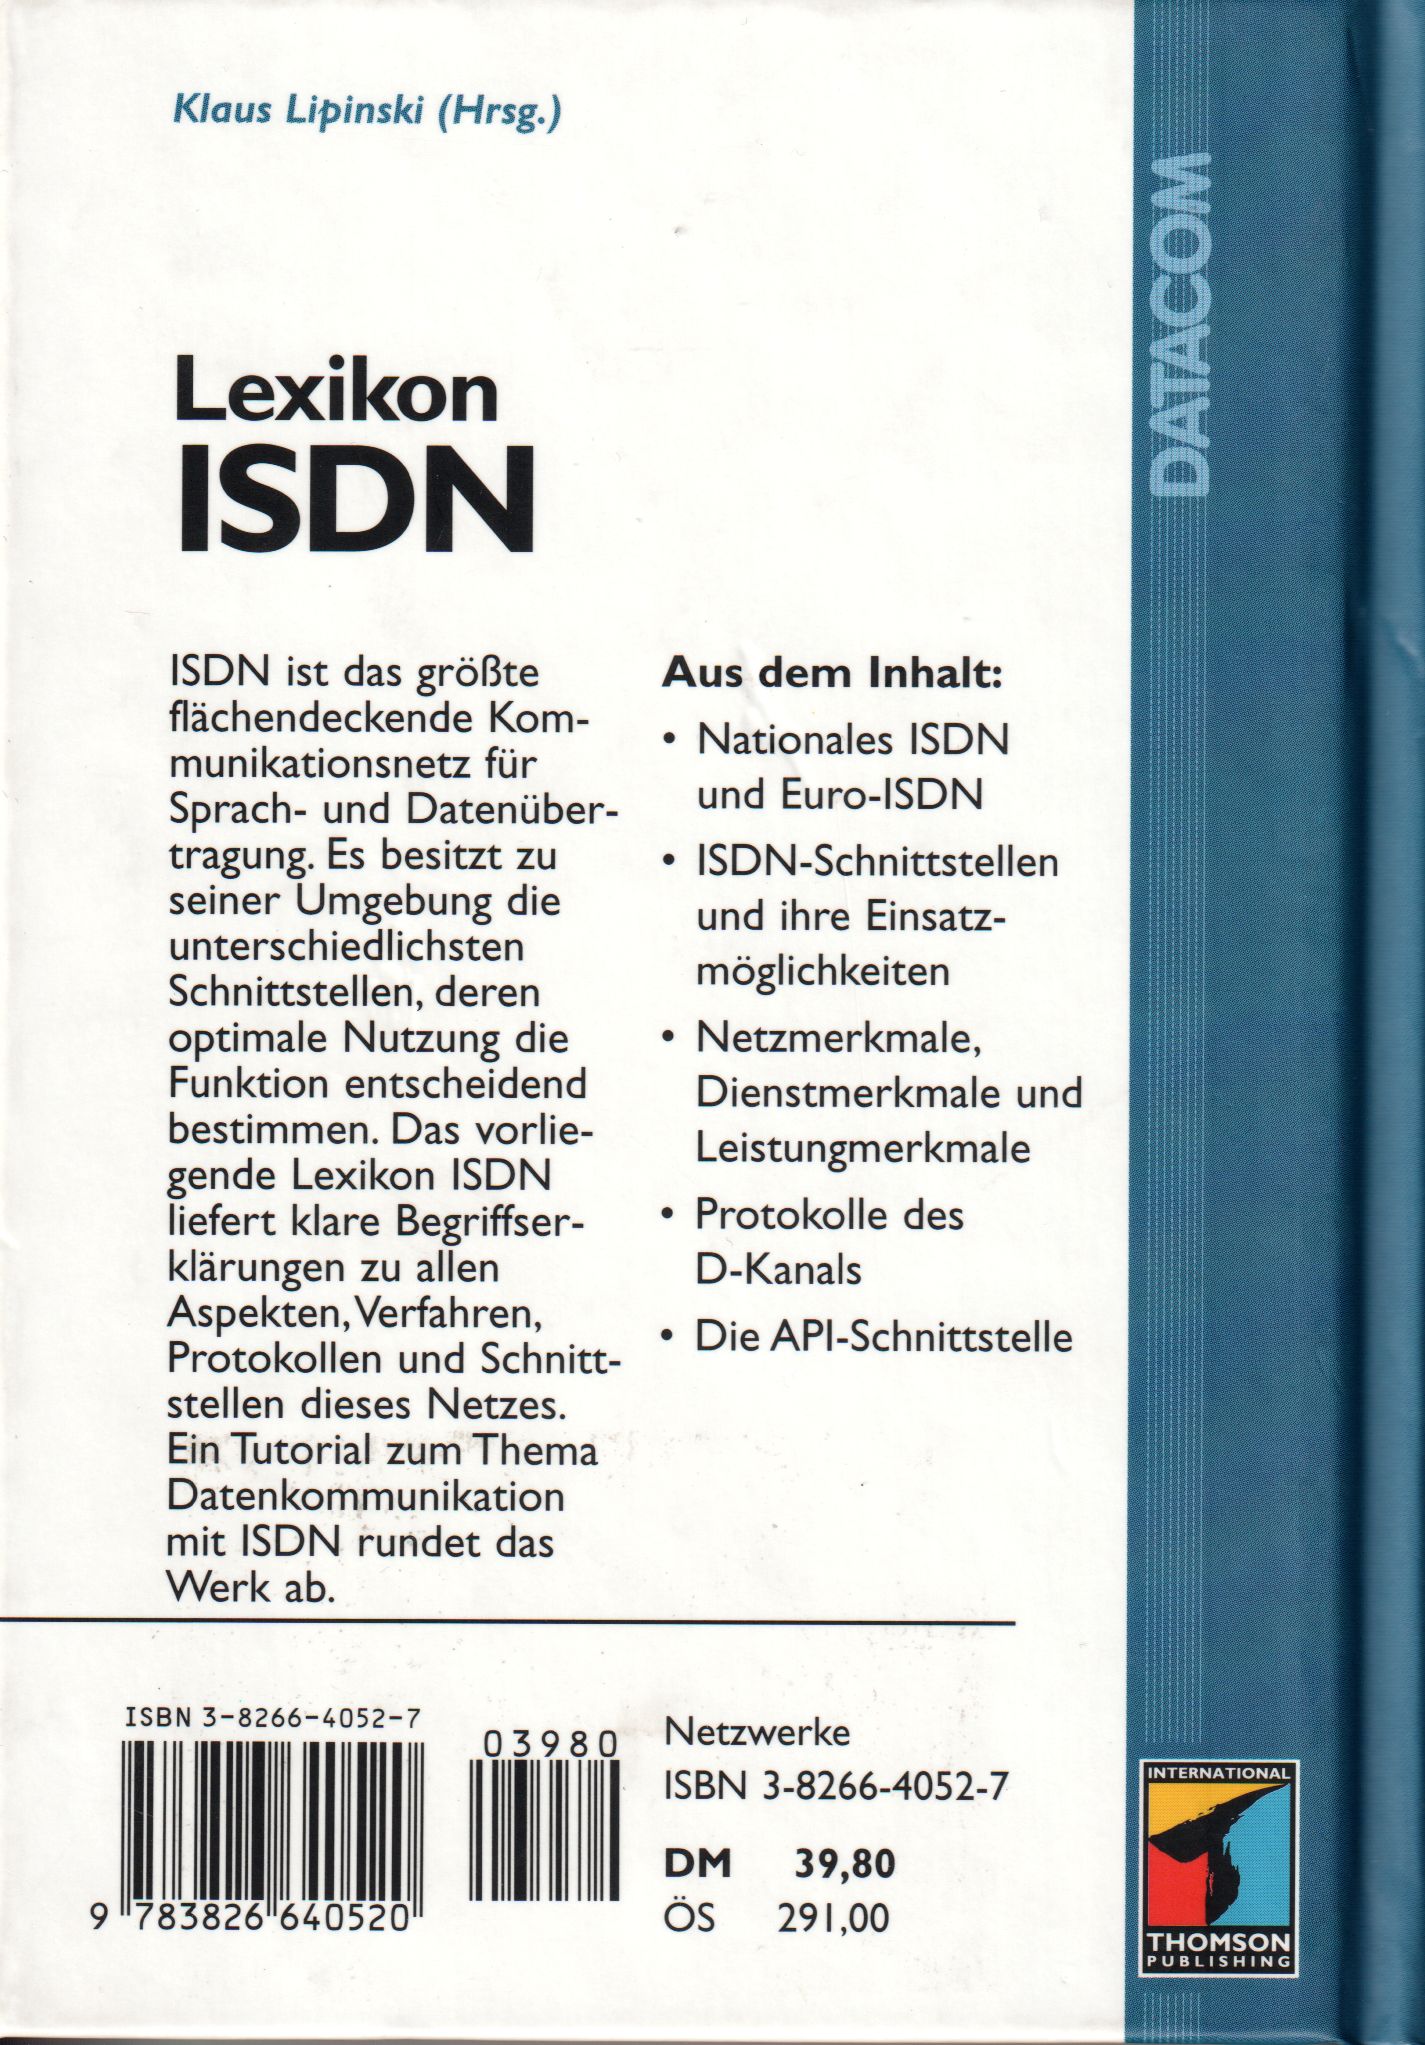 lipinski-lexikon_isdn.back.jpg